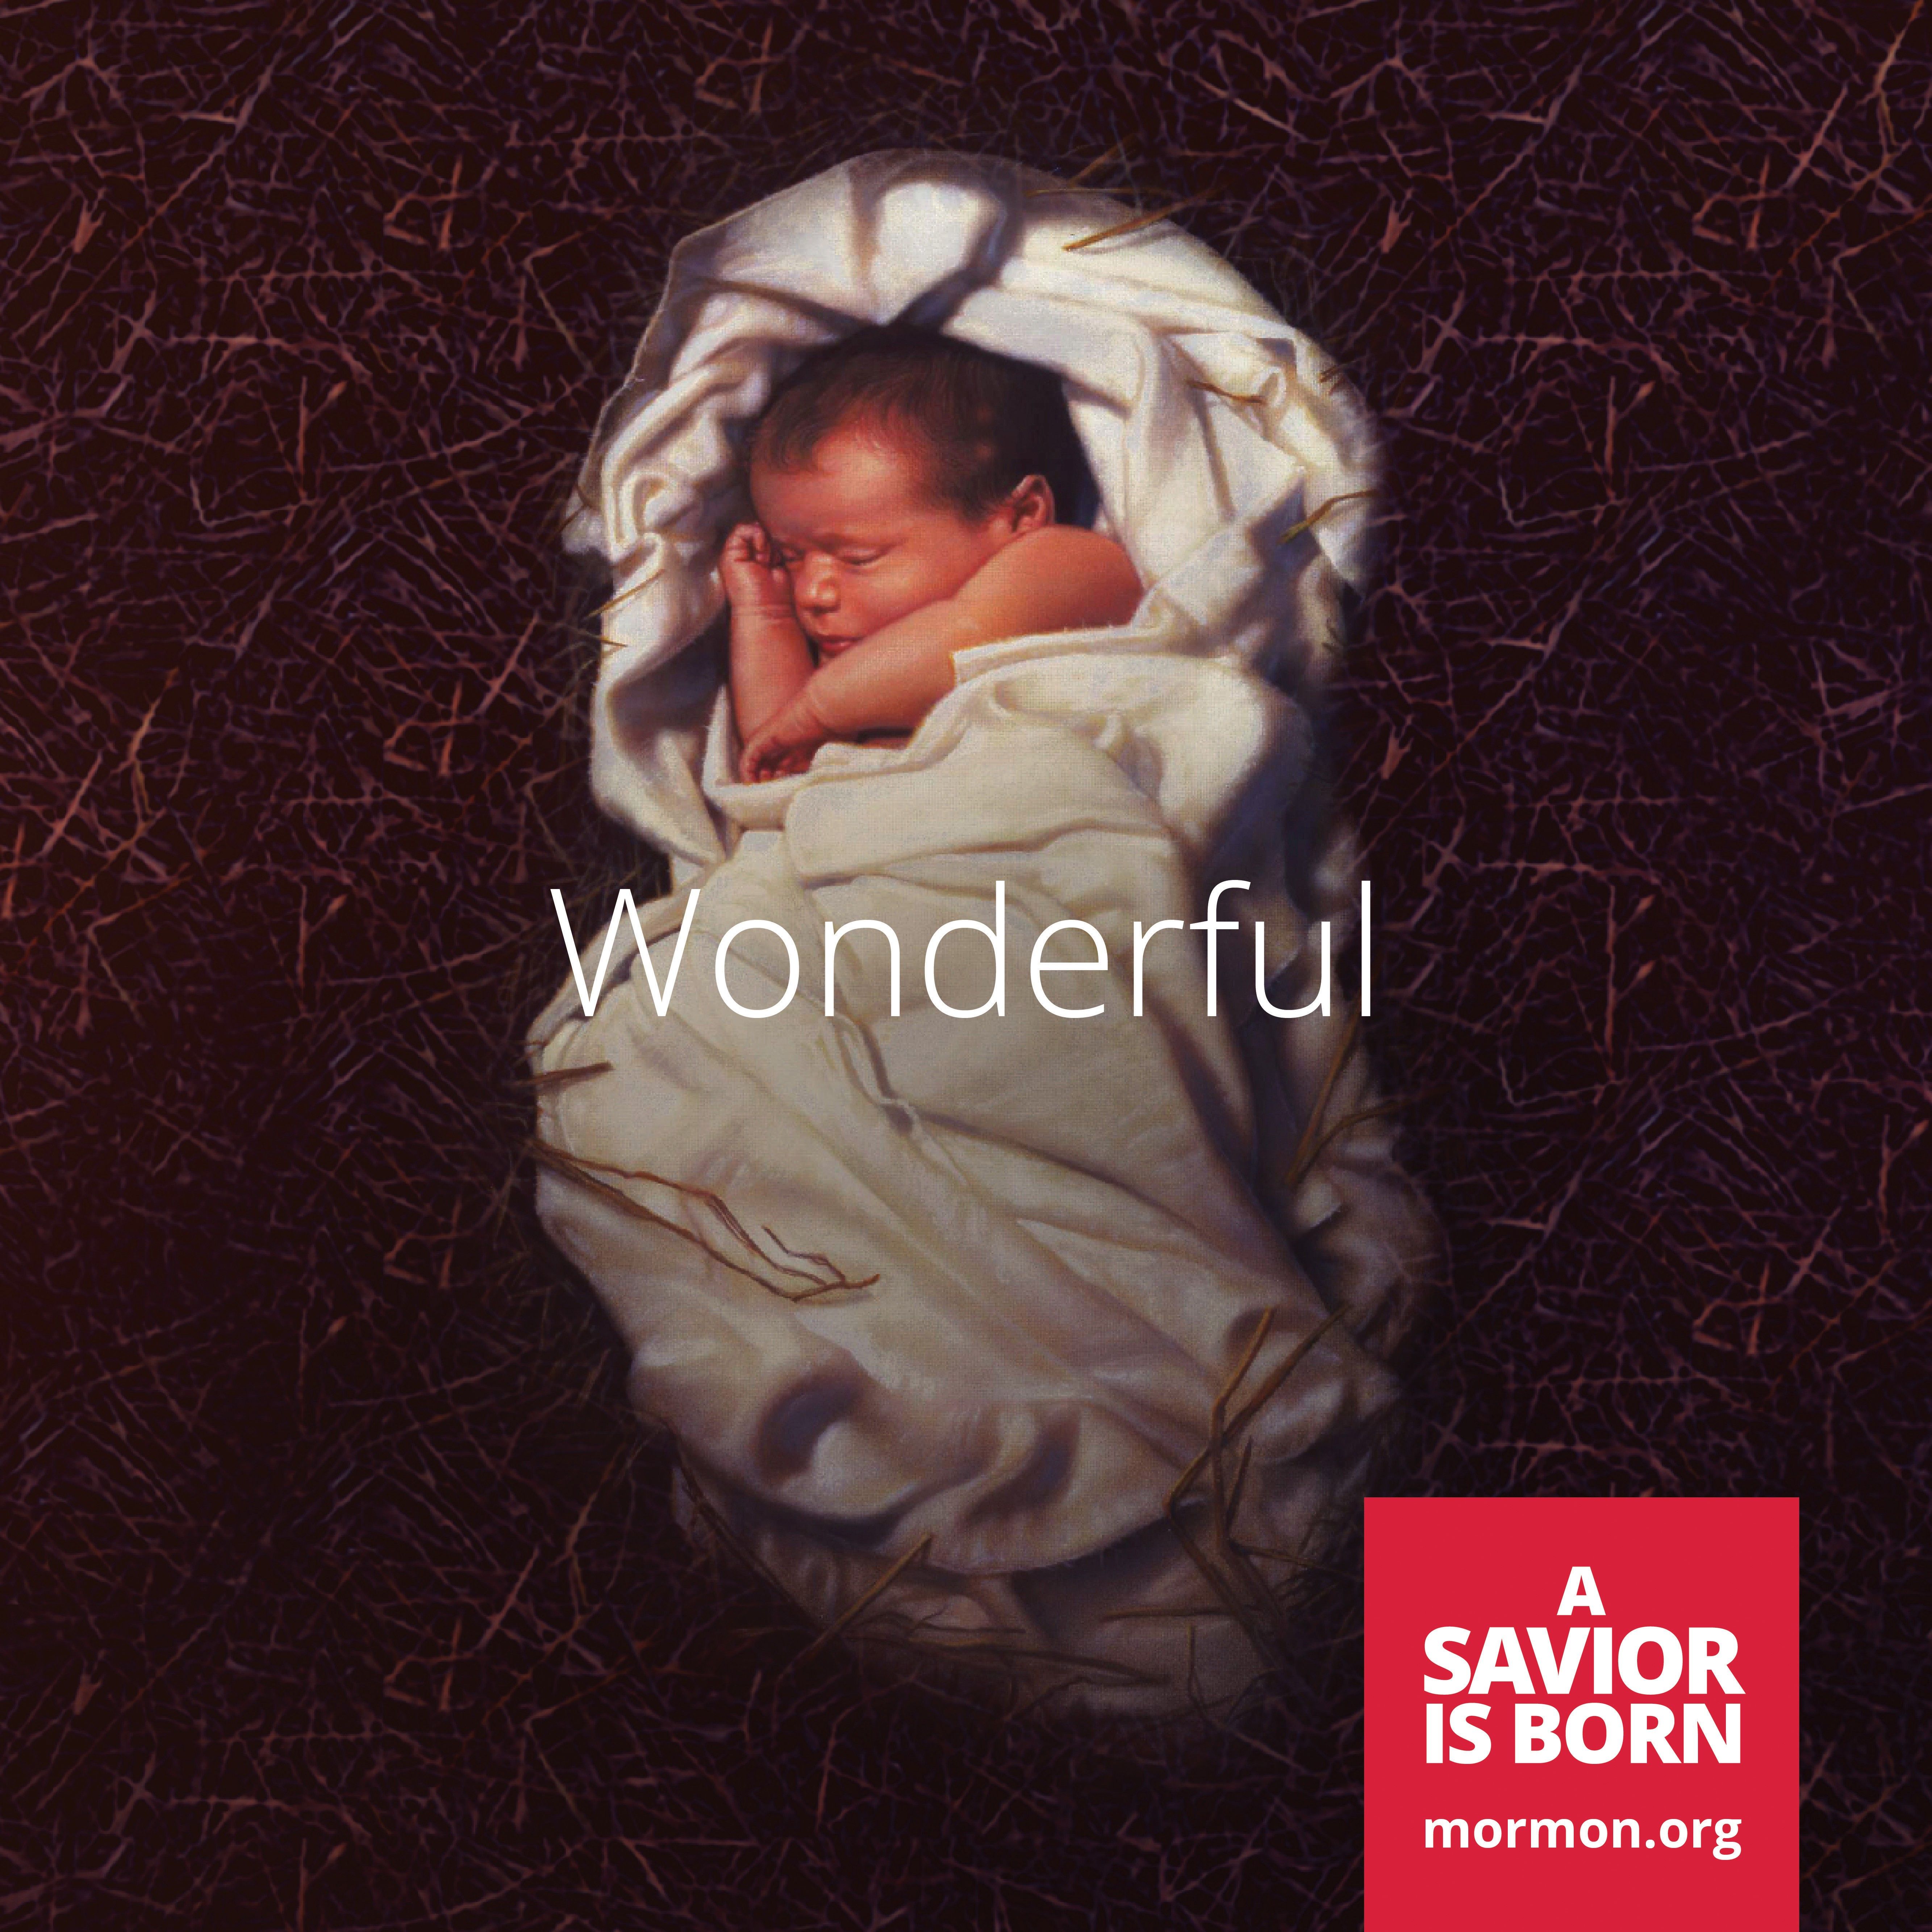 “Wonderful.” —mormon.org, “A Savior Is Born”